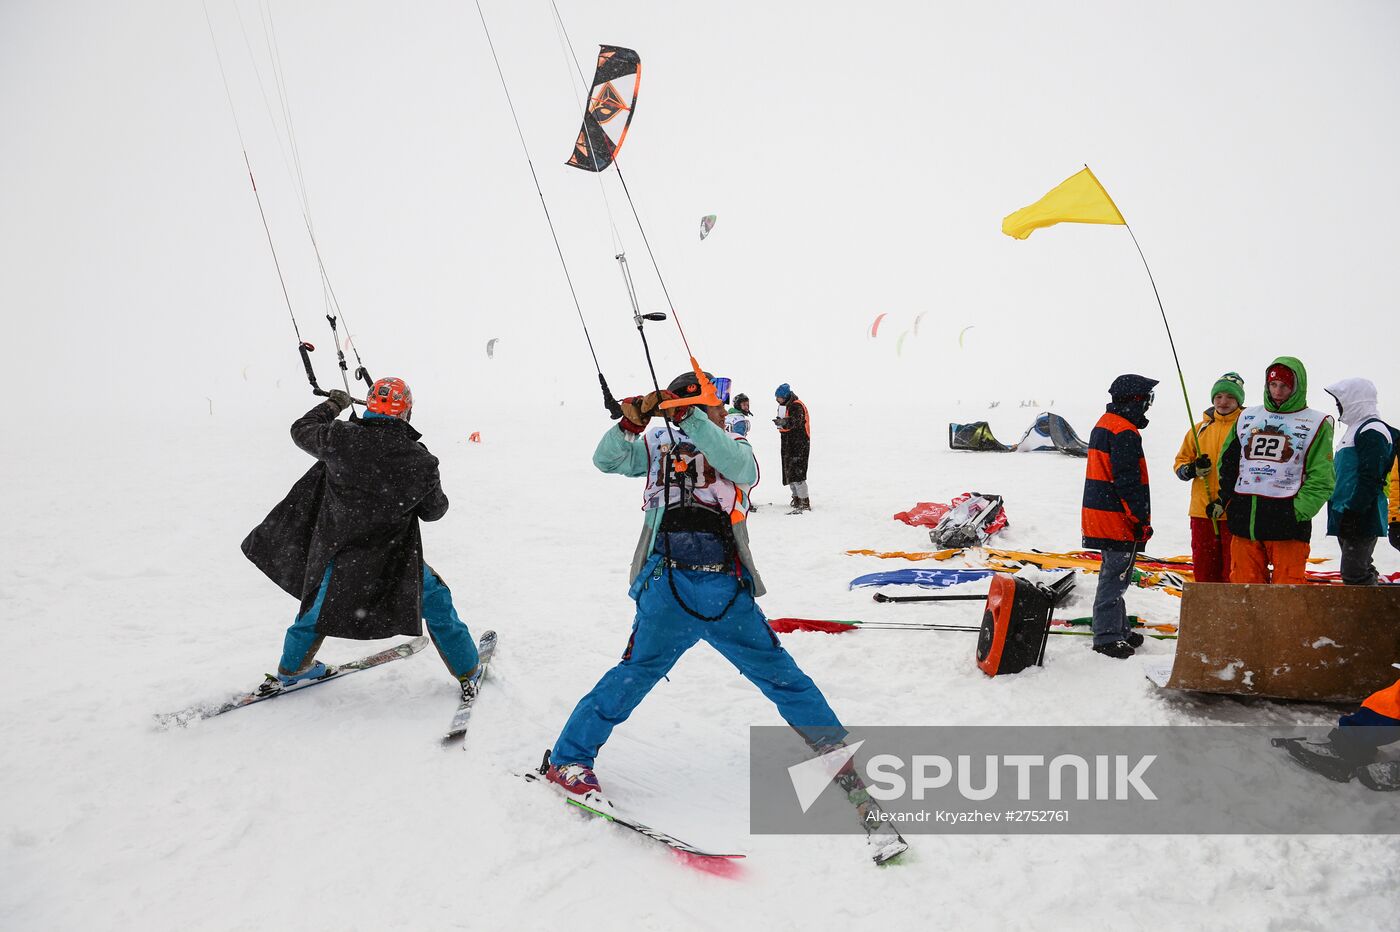 Siberian Kite Cup 2015